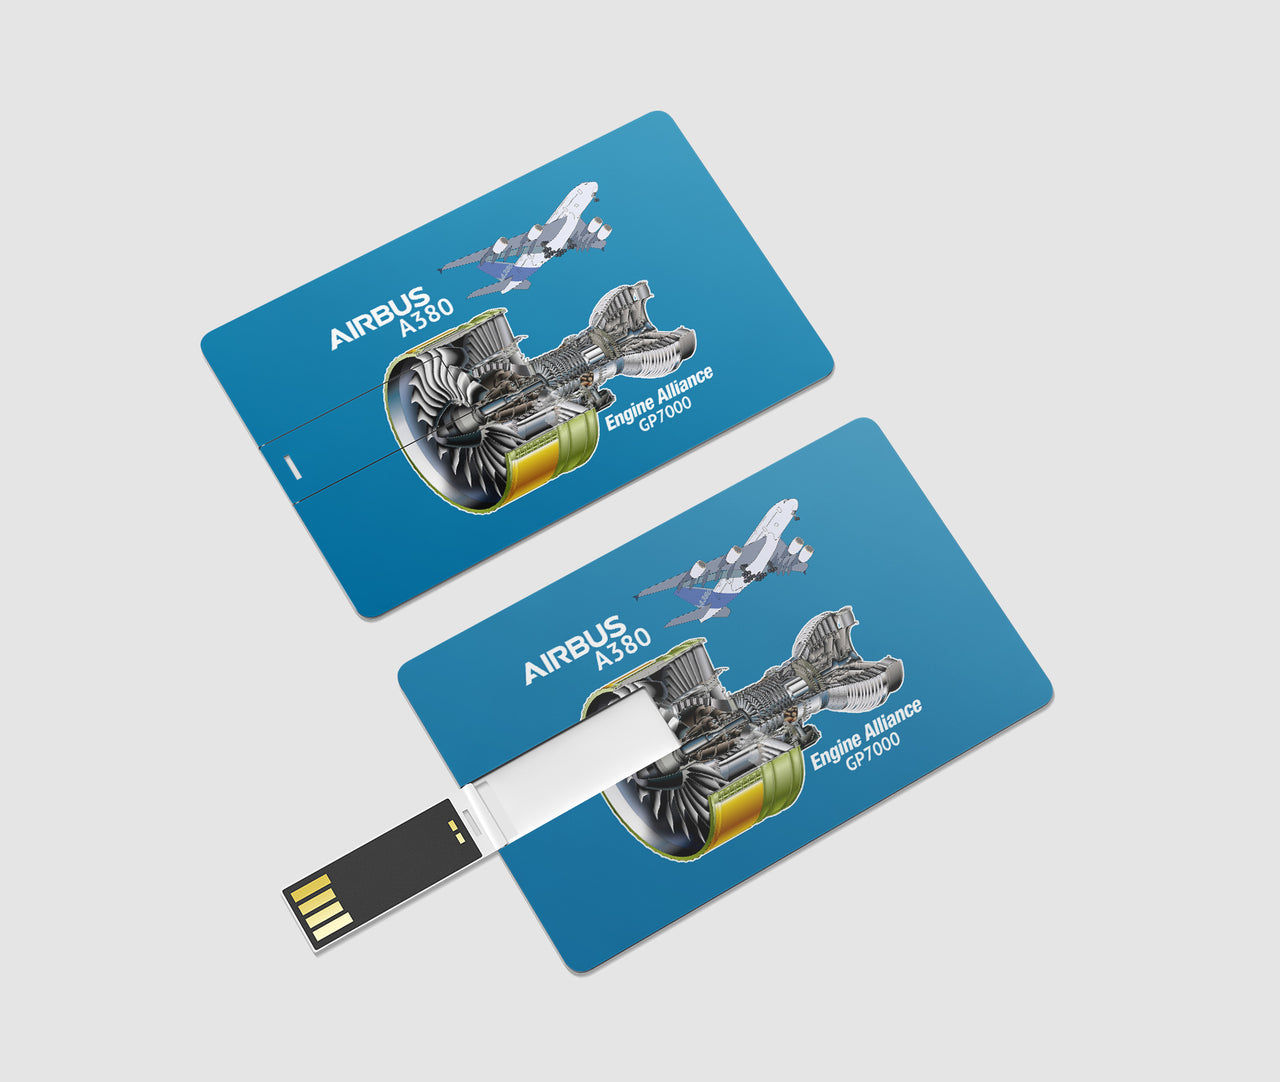 Airbus A380 & GP7000 Engine Designed USB Cards